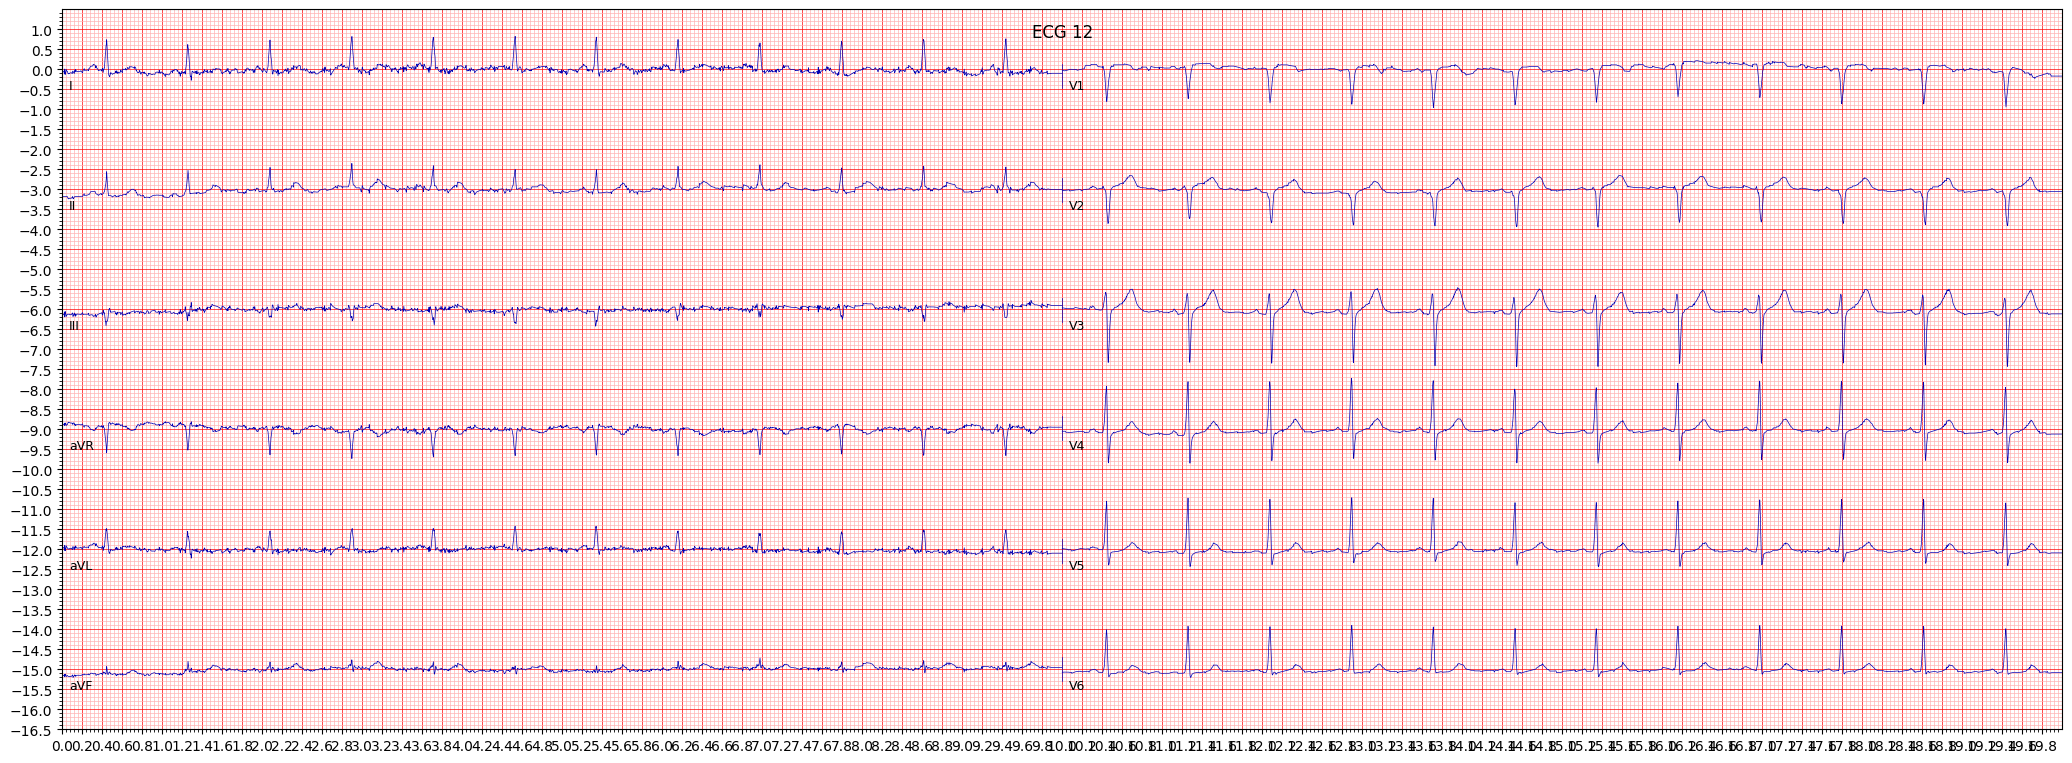 anterior myocardial infarction (AMI) example 15499